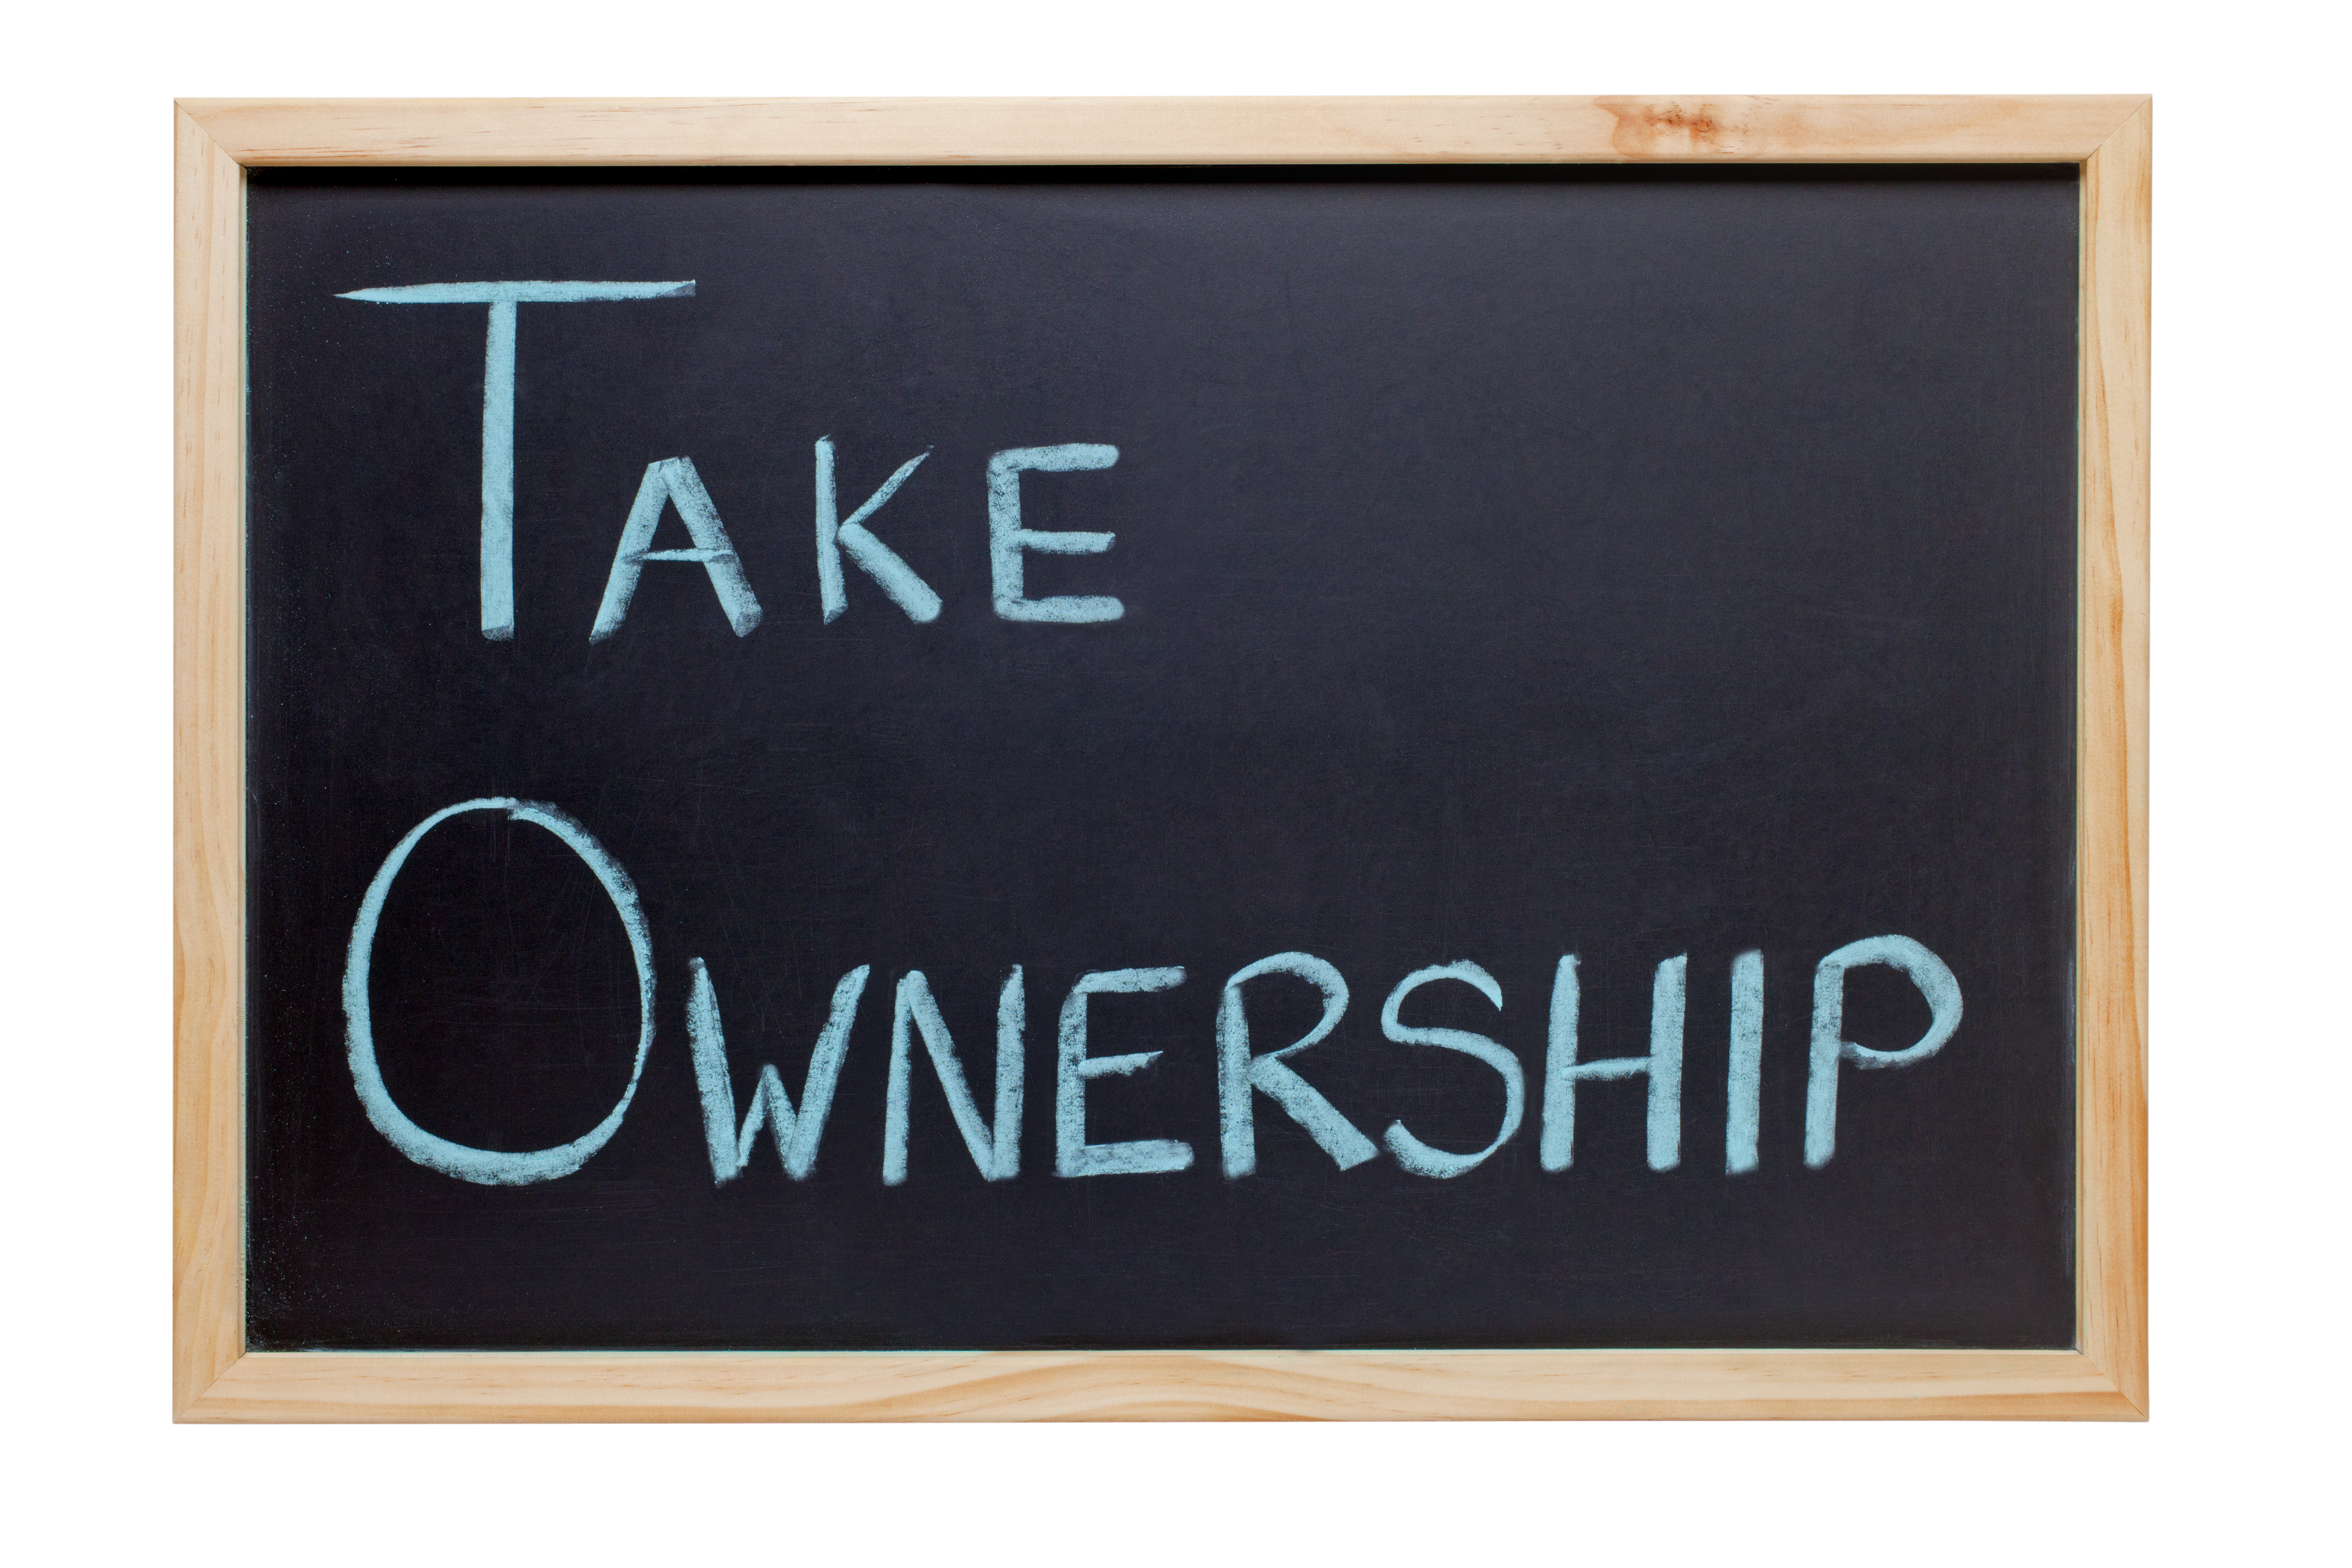 Take owners. Take on an ownership. Ownership. Take ownership gitlub. TAKEOWNERSHIPPRO.